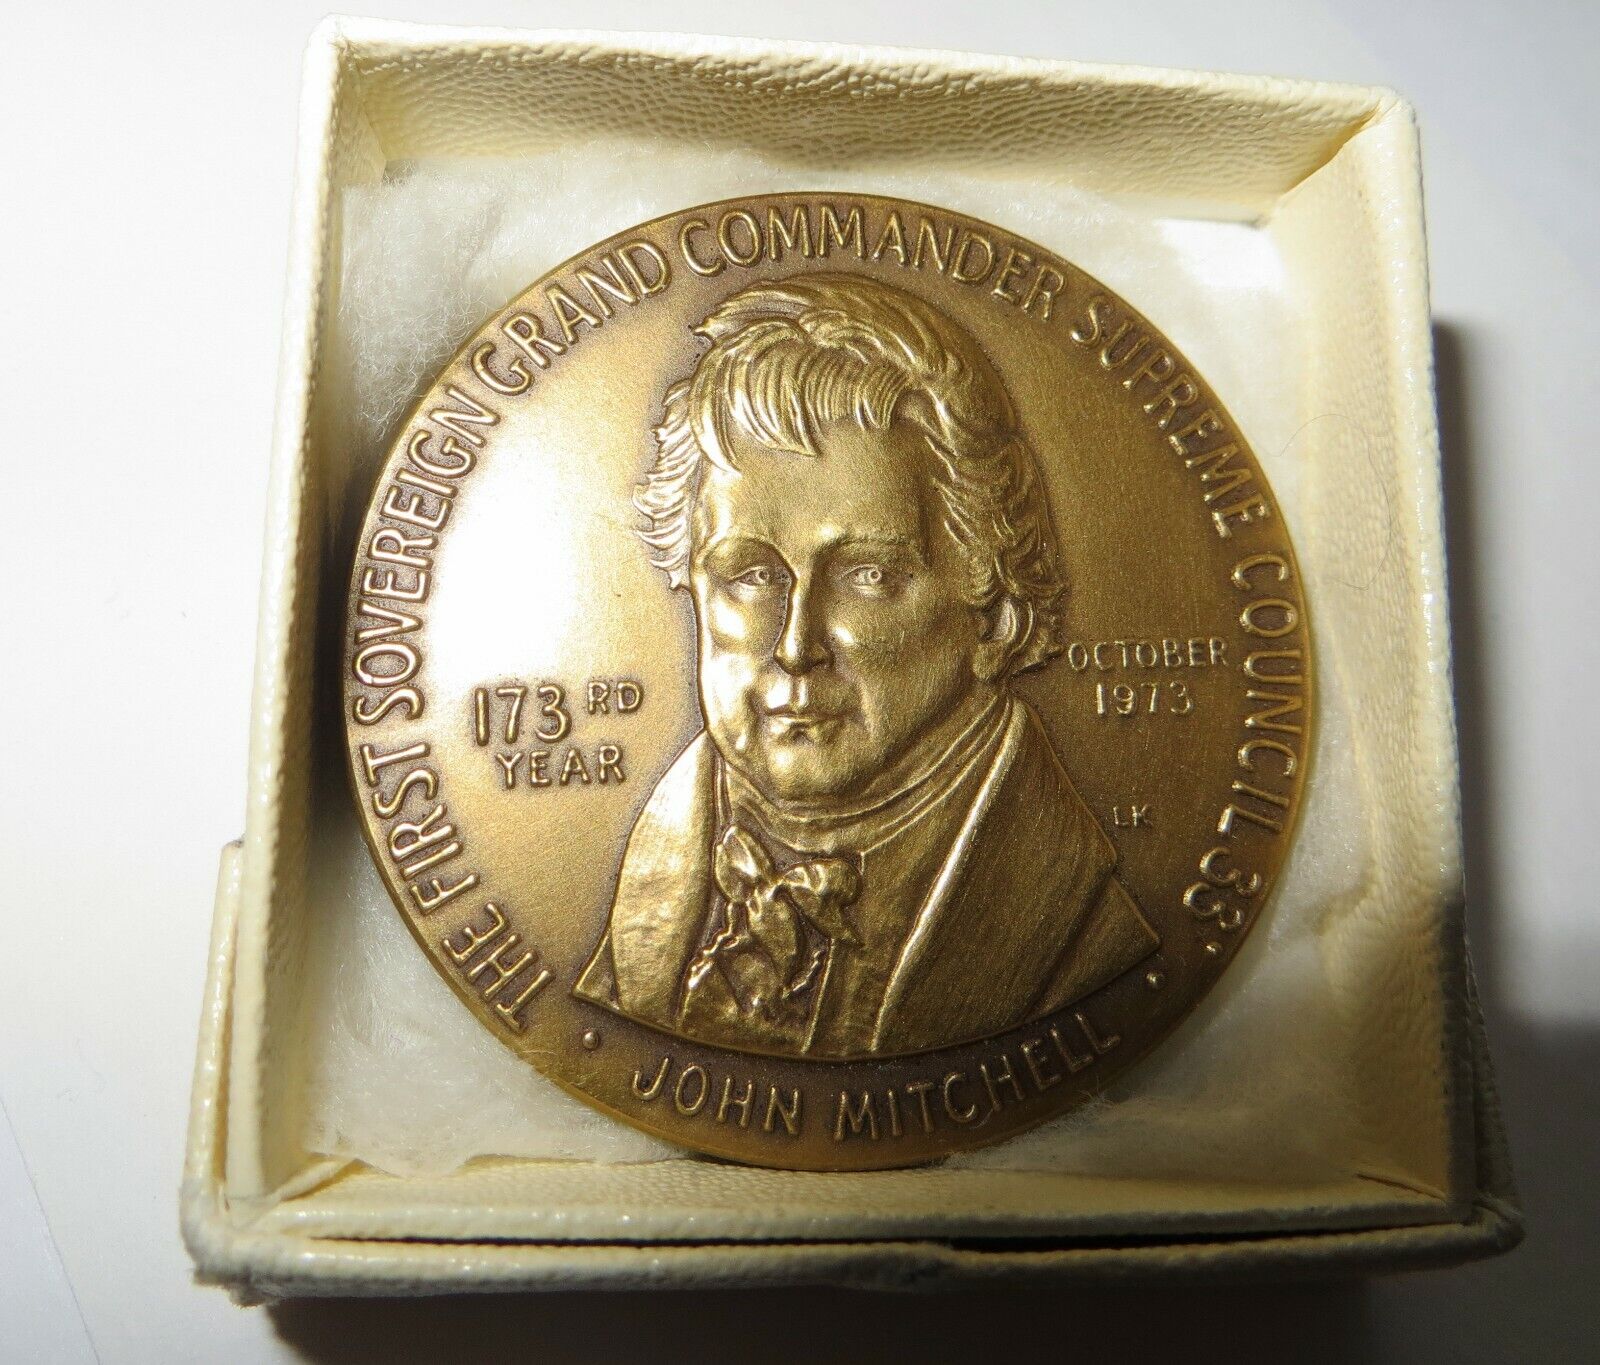 John Mitchell Coin Commemorative Supreme Council Vintage 1973